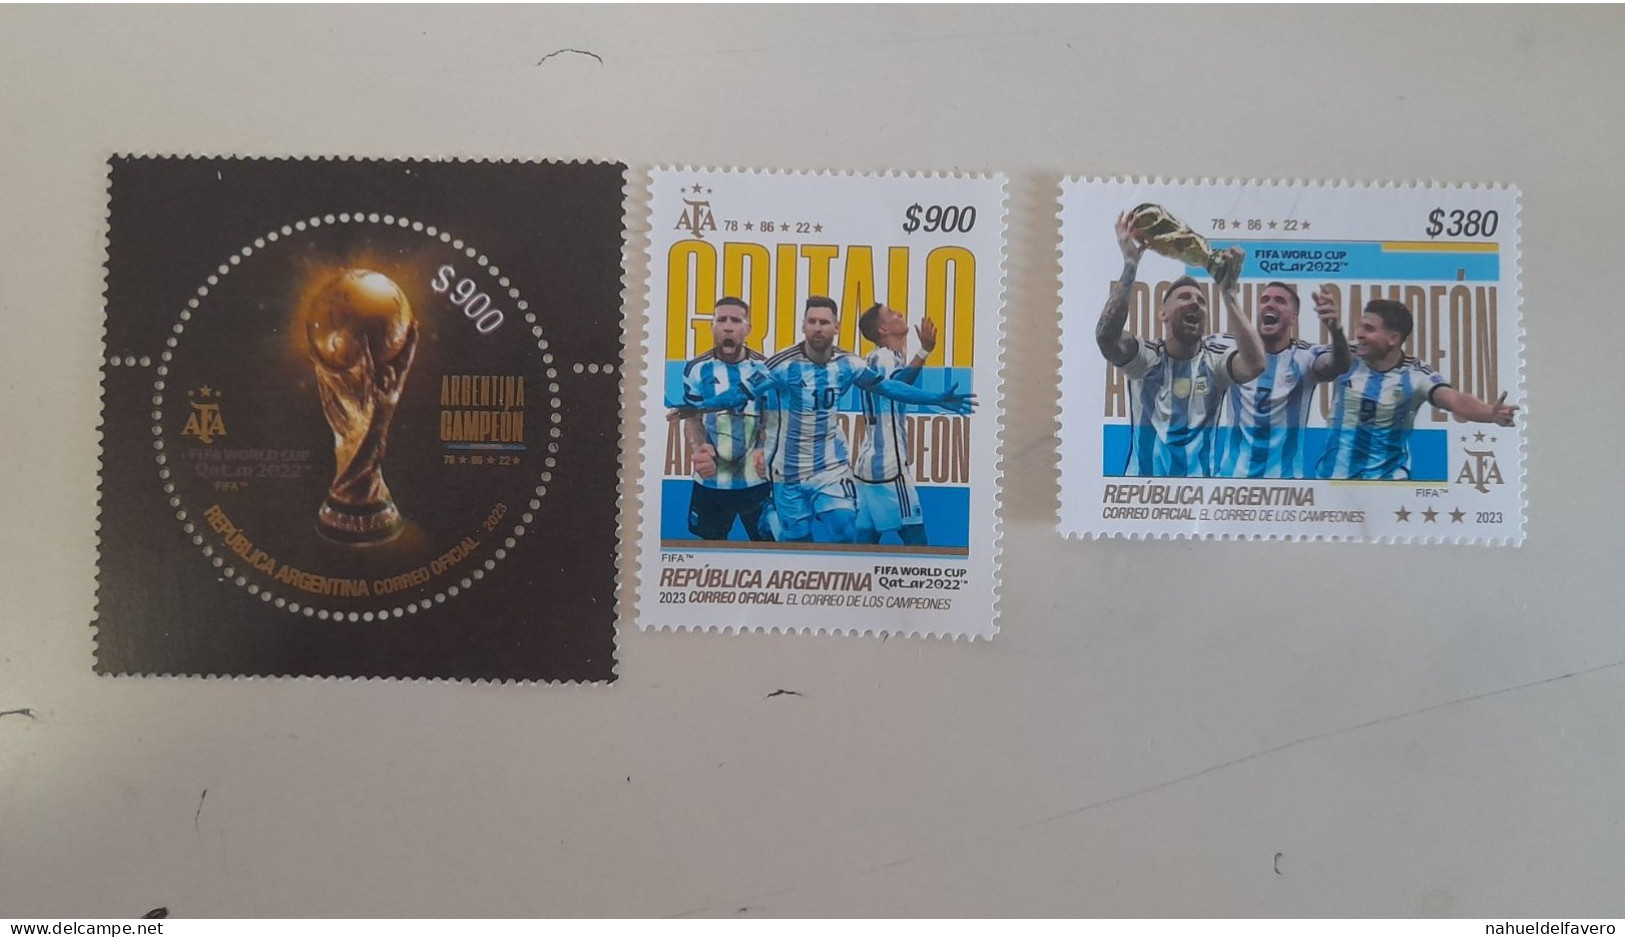 ARGENTINA 2023 PACK CAMPEON DEL MUNDO DE FUTBOL, Bloque carnet sellos sobre y mas... MESSI